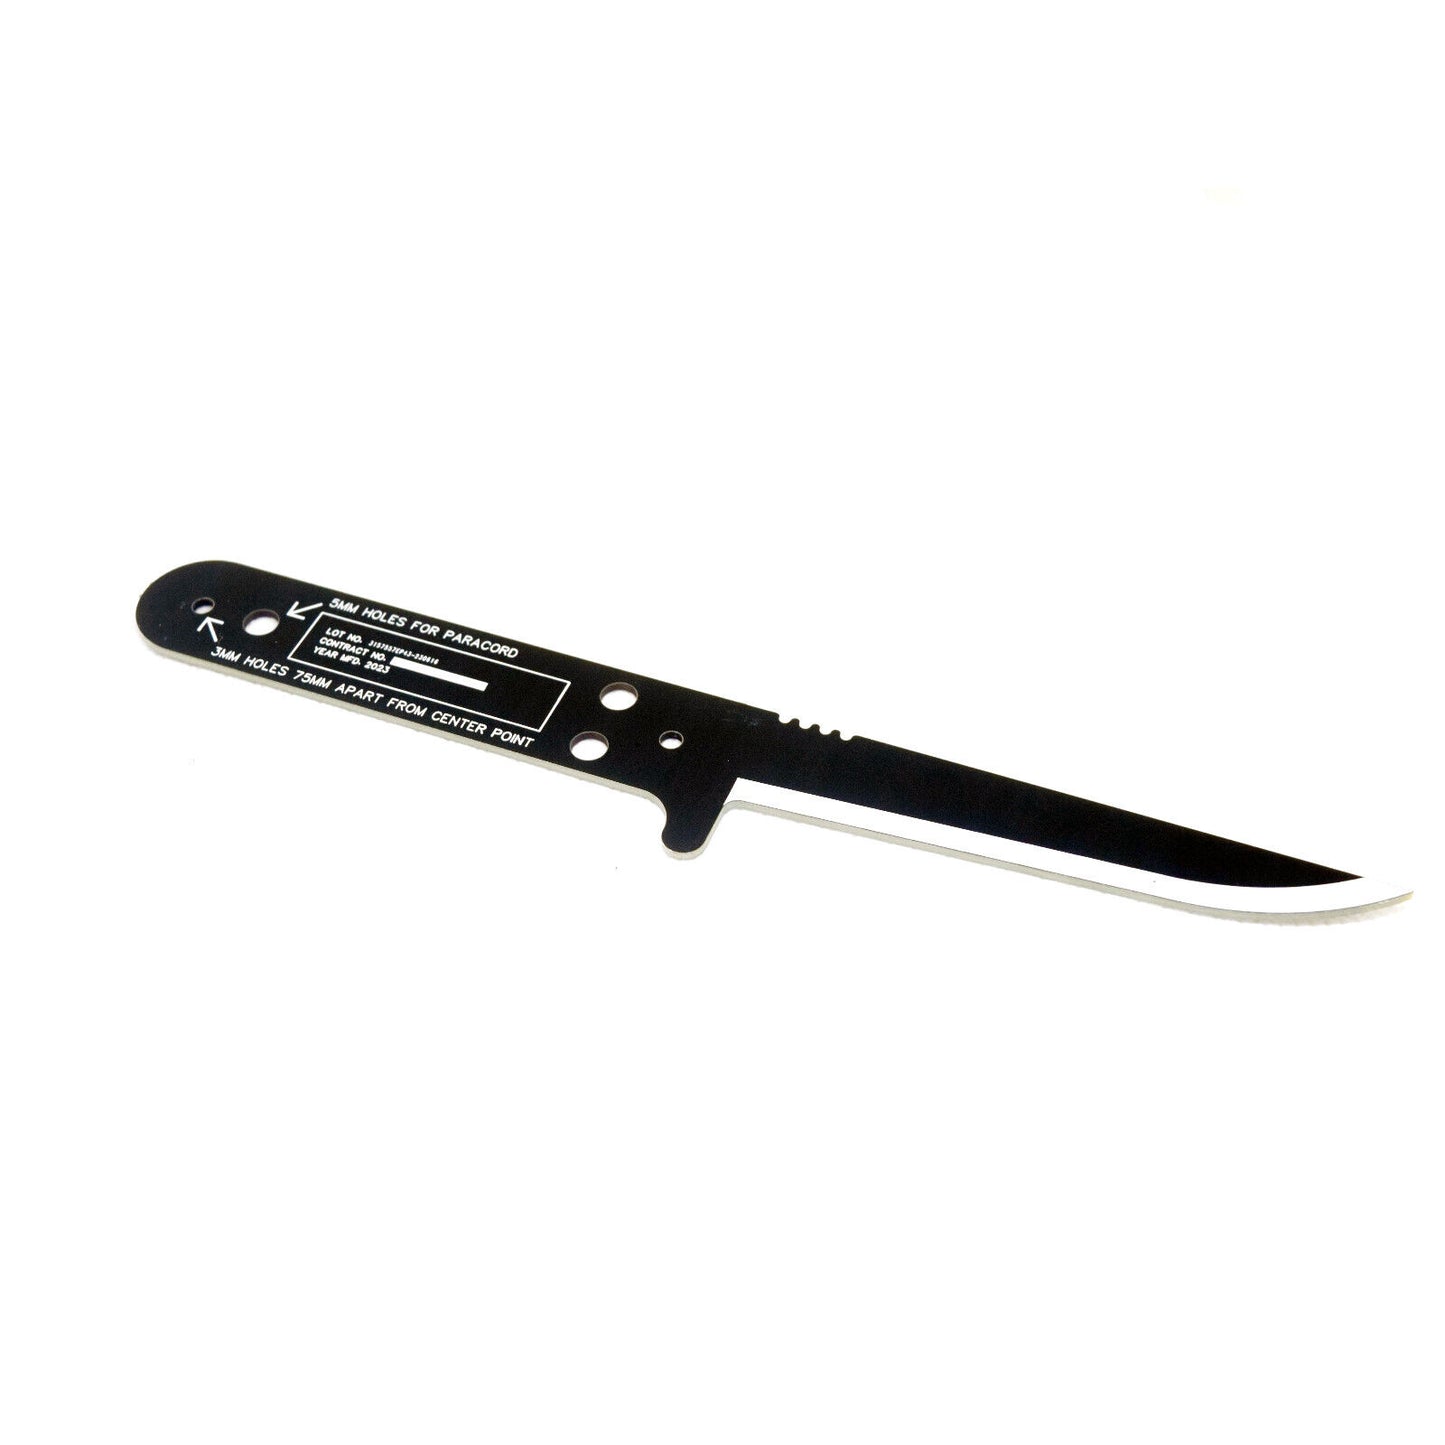 Delta Dart Knife Alternative - Concealable, Non-Metallic, Compact, Thin, Light